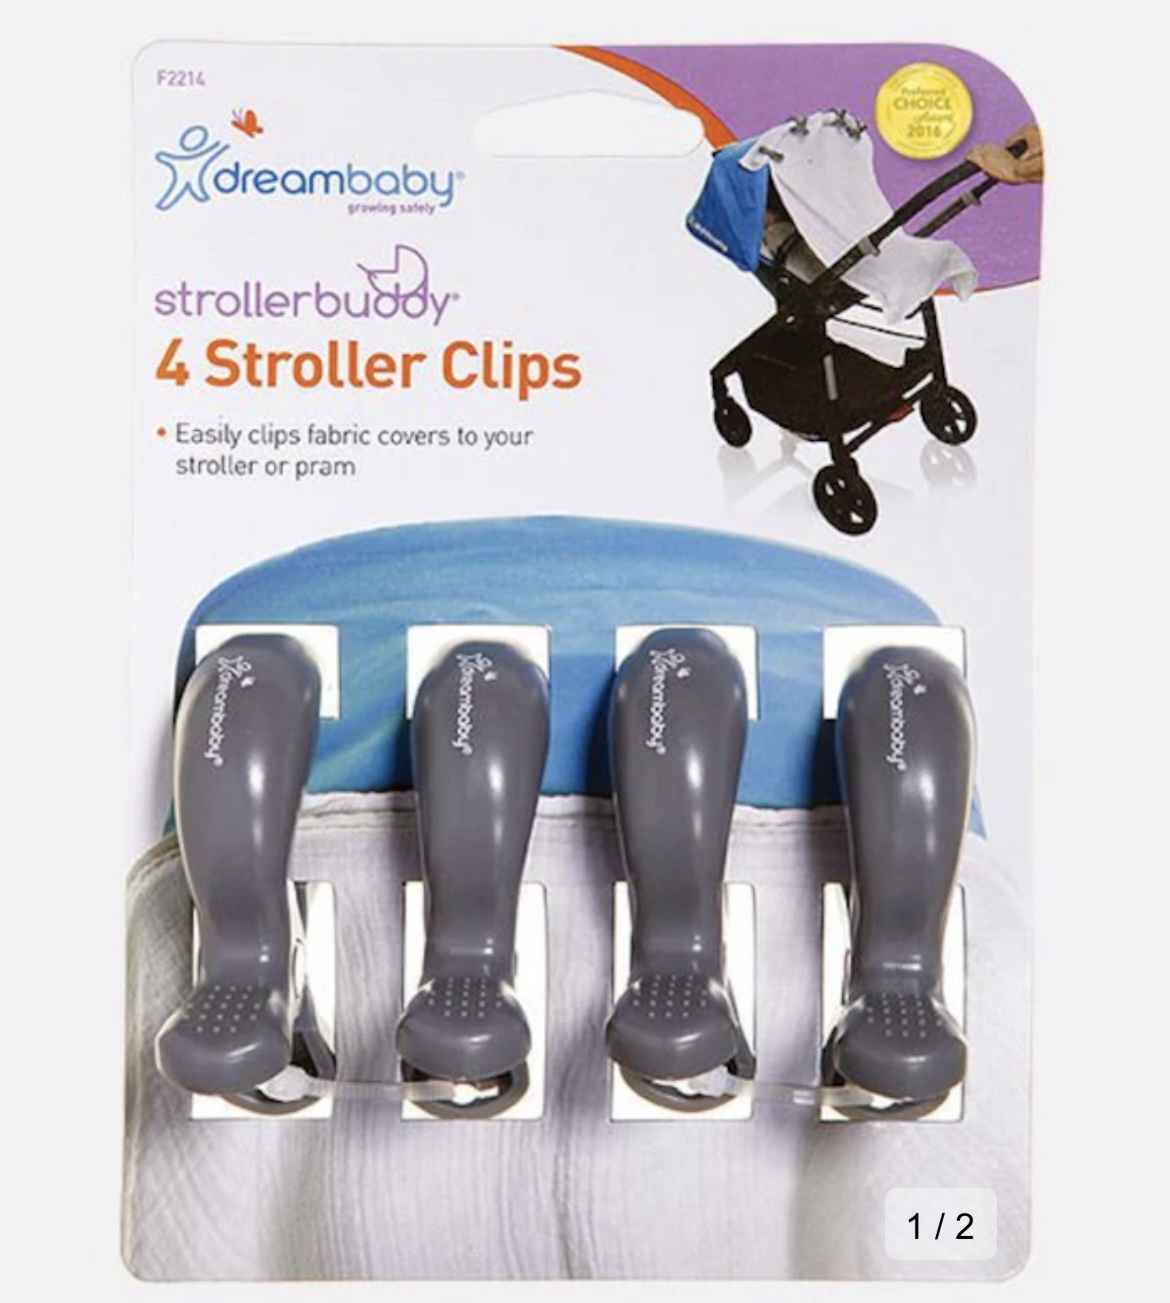 Dreambaby Strollerbuddy Stroller Clips 4 Pack